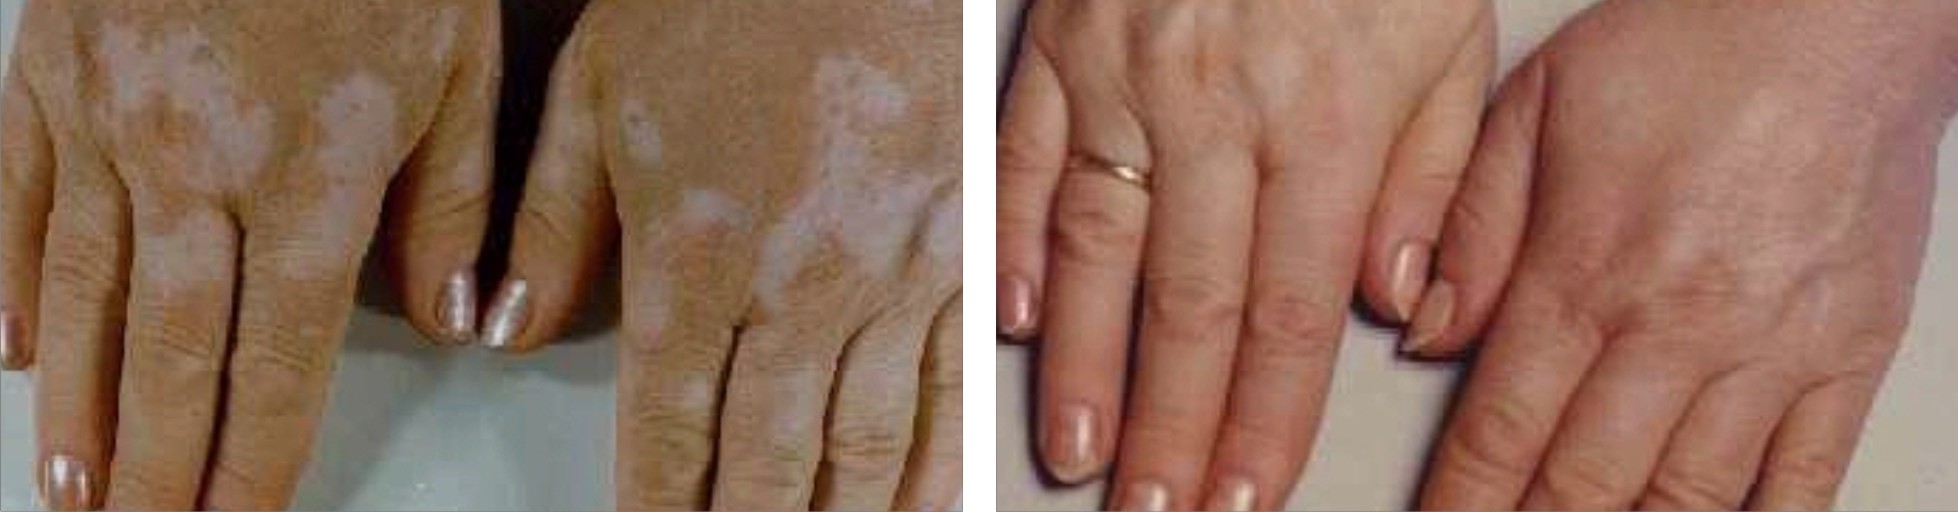 Vitiligo Image Two